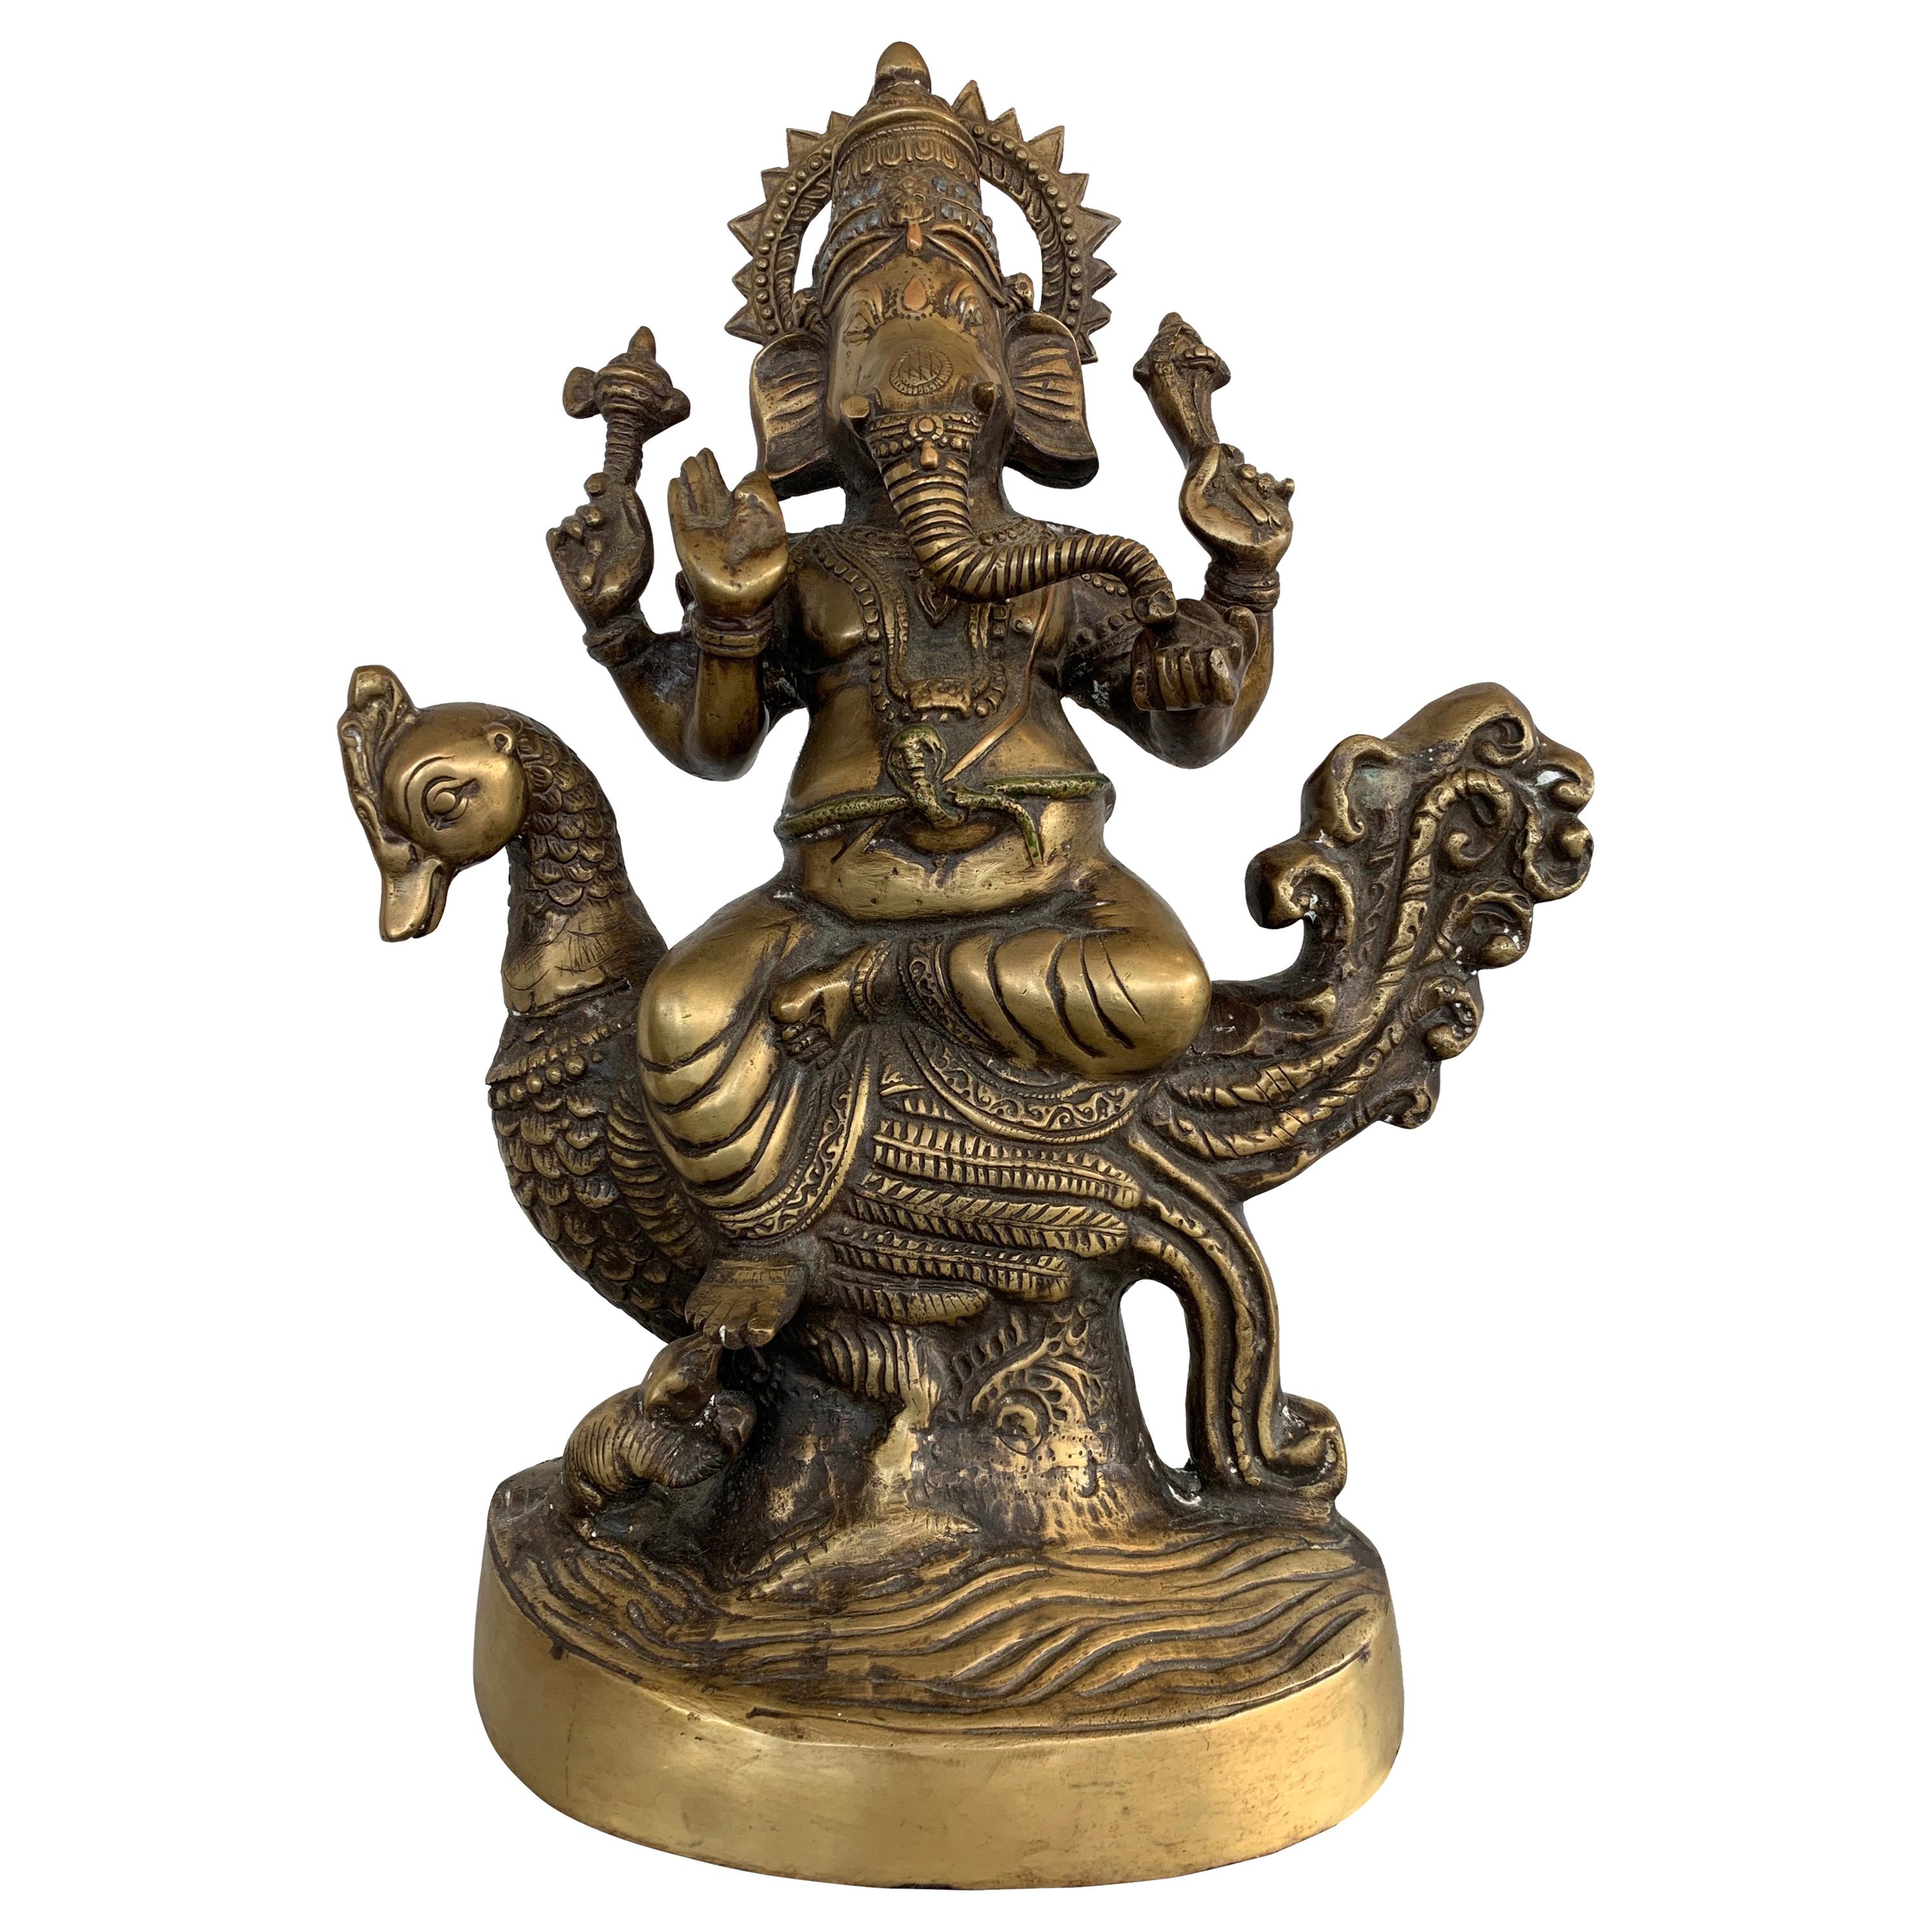 Large Bronze Sculpture of Hindu God Ganesha Elephant Pachyderm